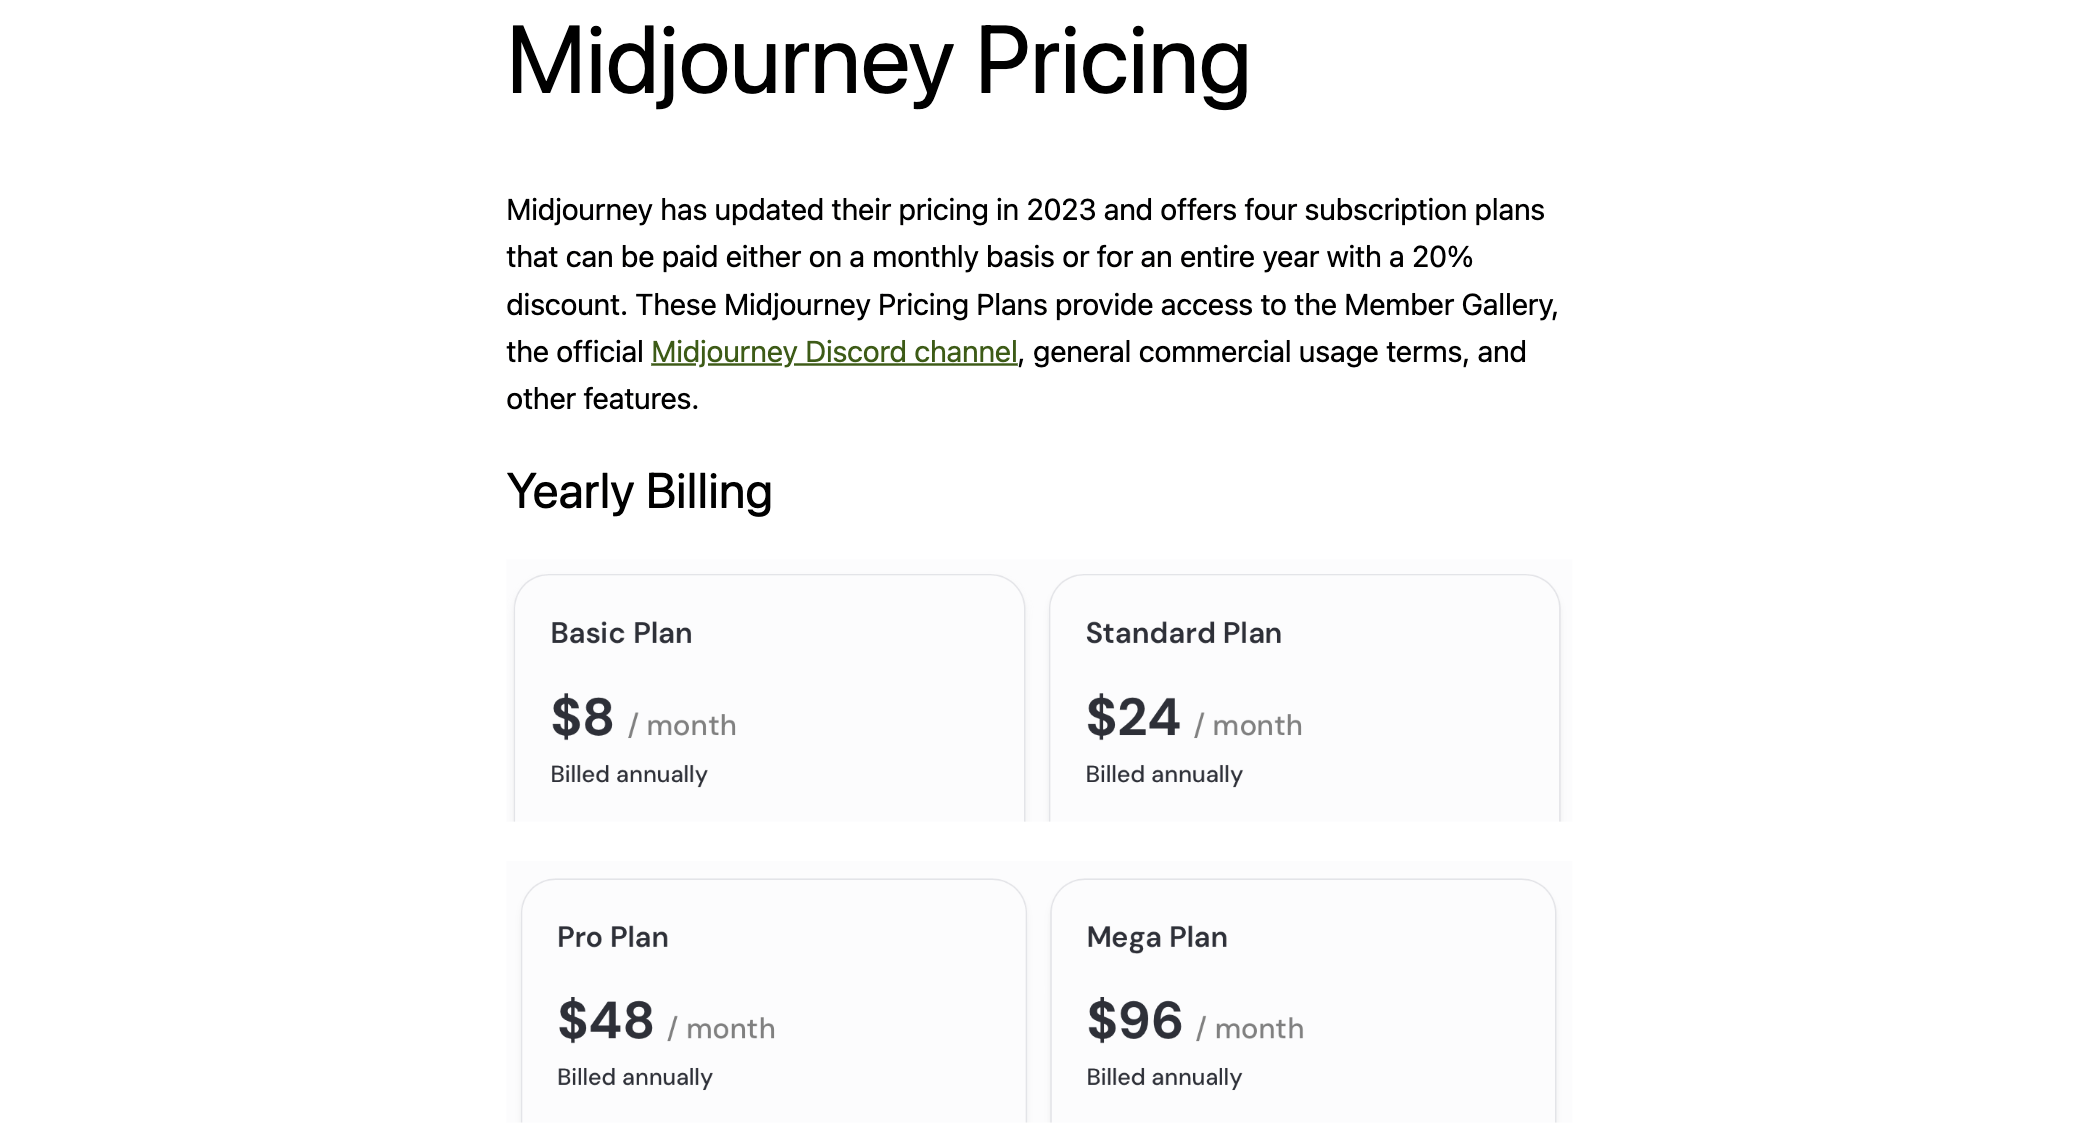 Midjourney pricing